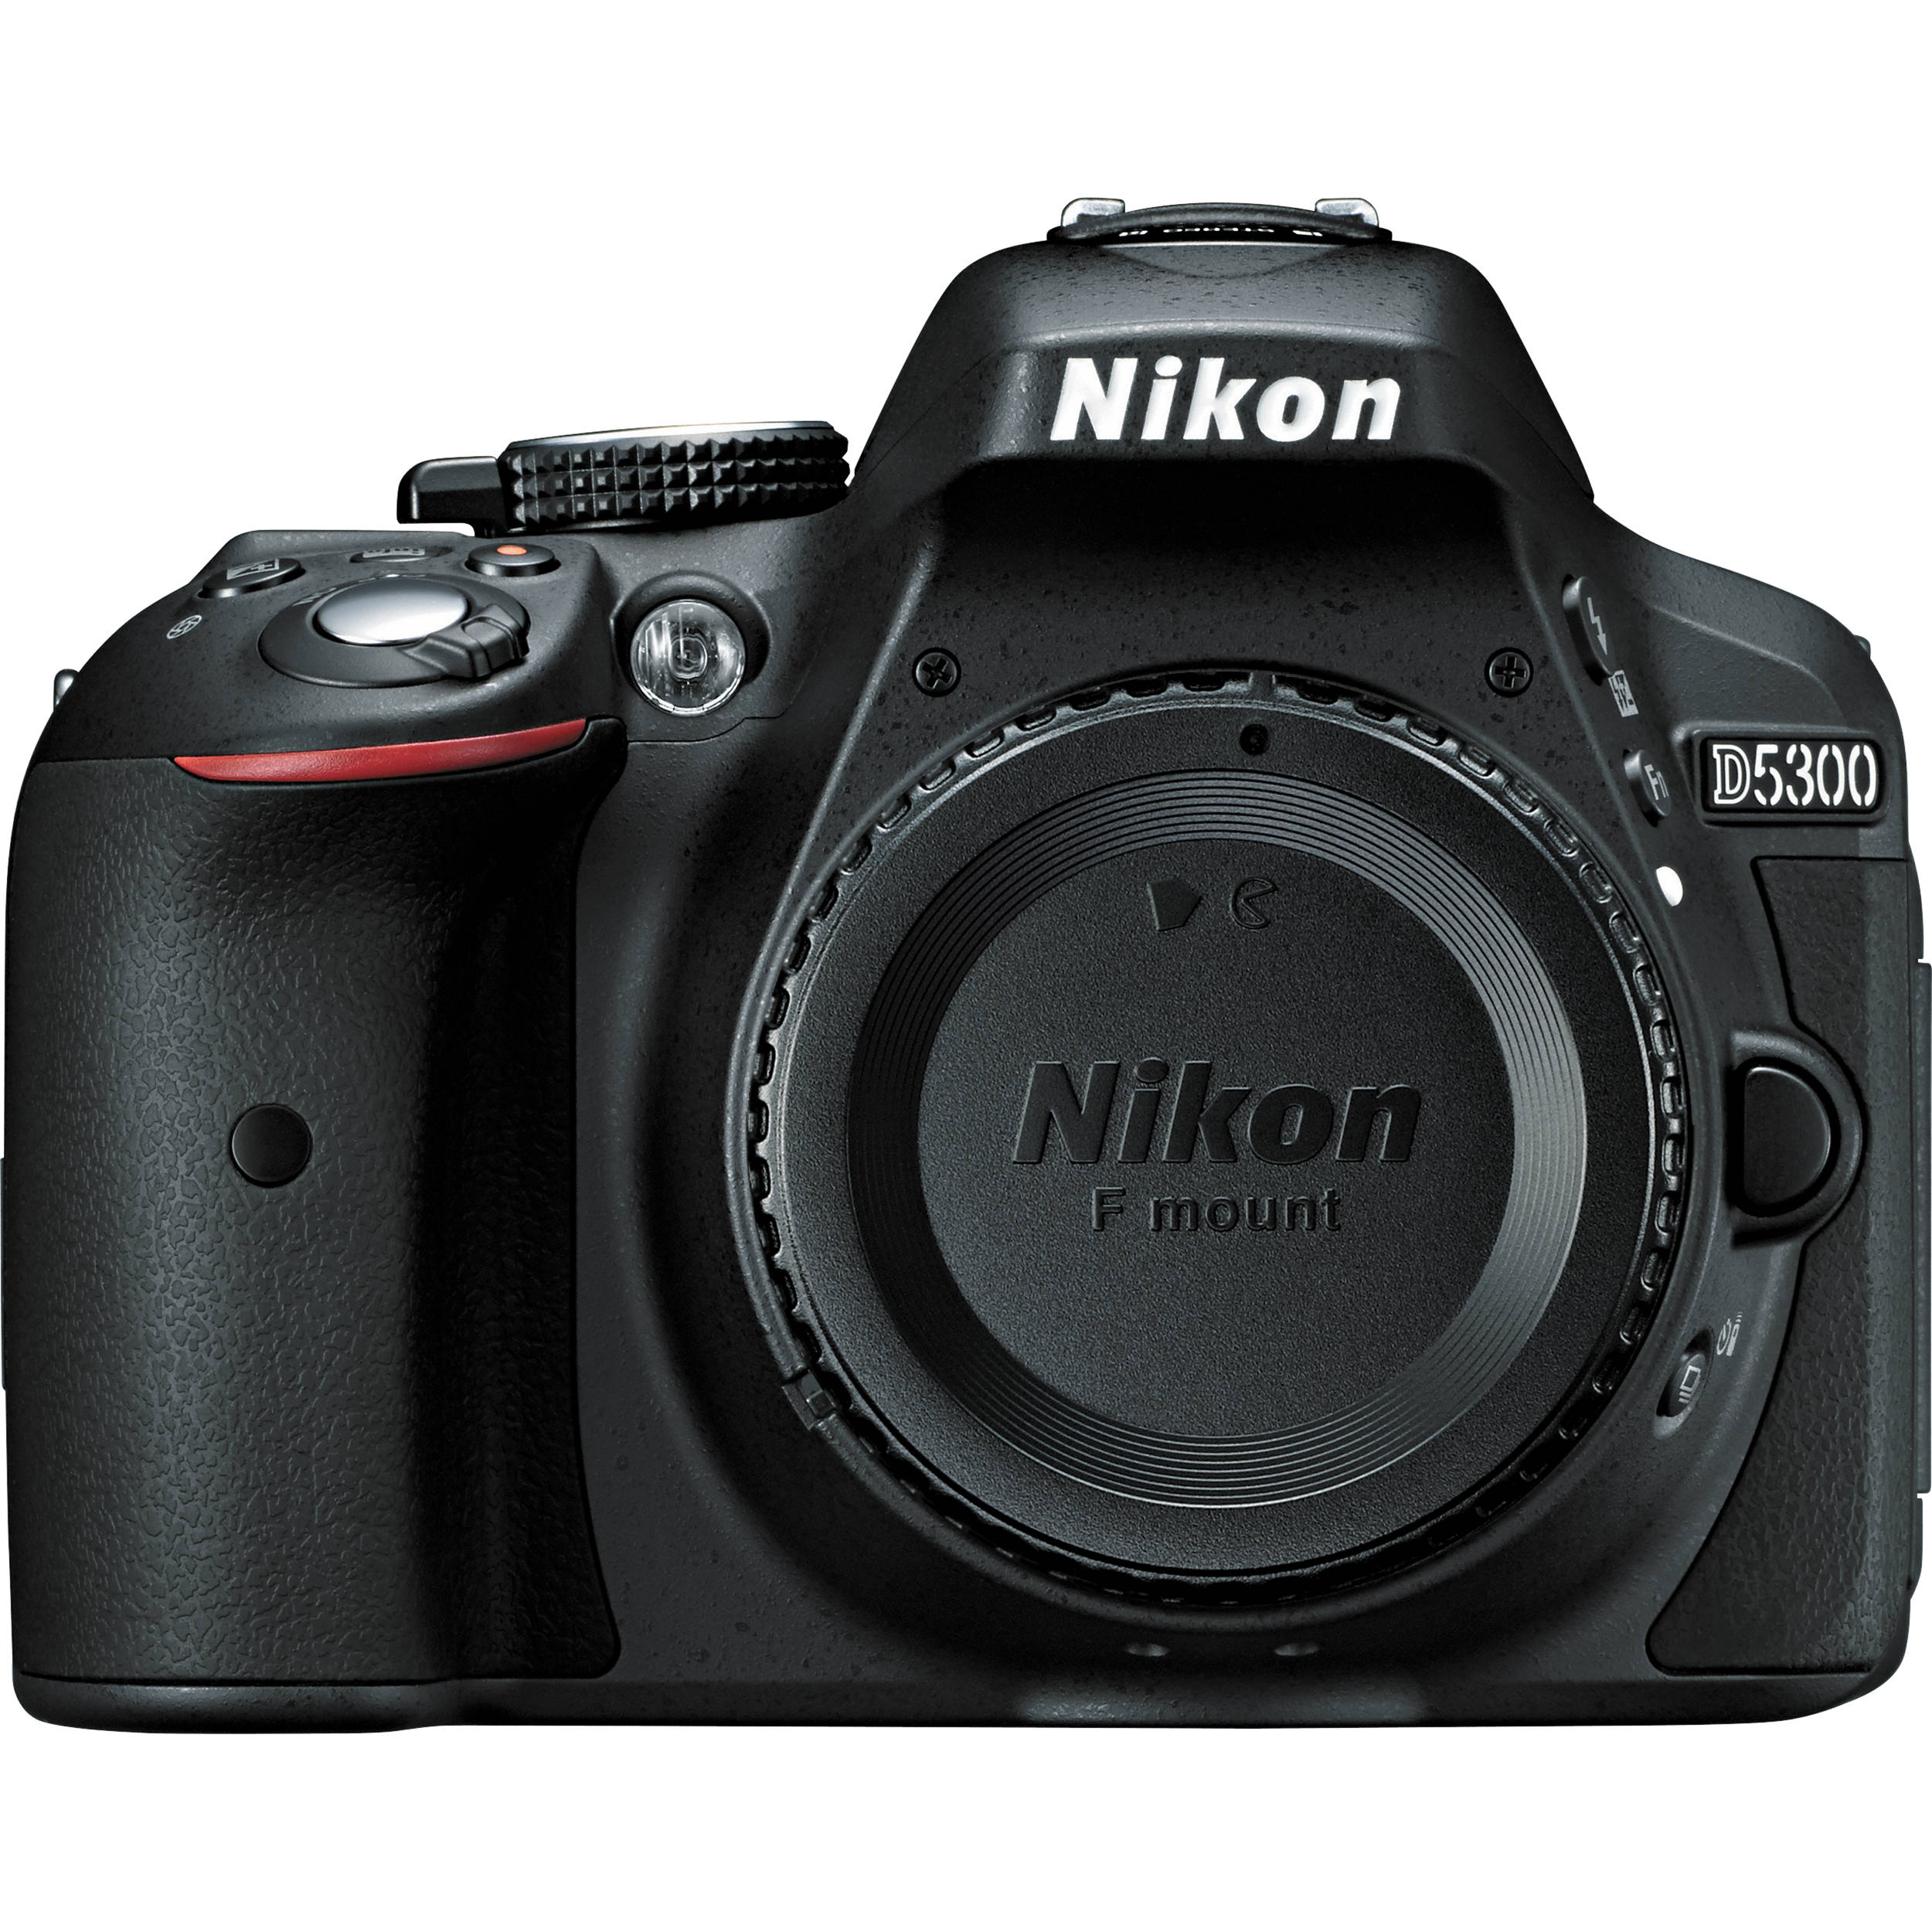 Nikon D5300 Dslr Camera Body Only Black 1519 B H Photo Video